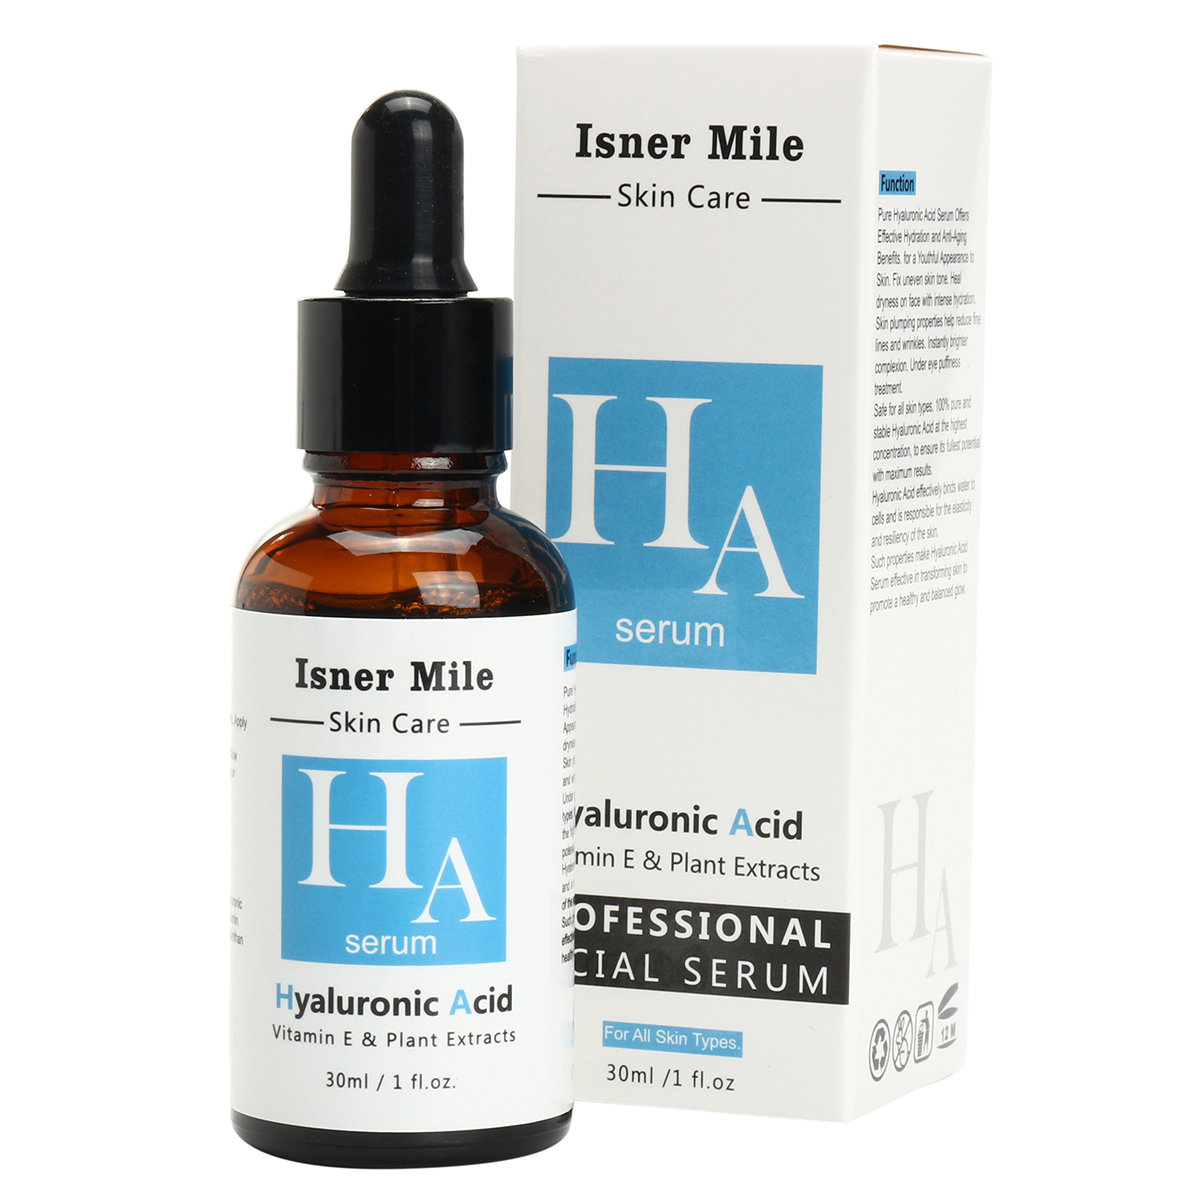 

Isner Mile Hyaluronic Acid Serum